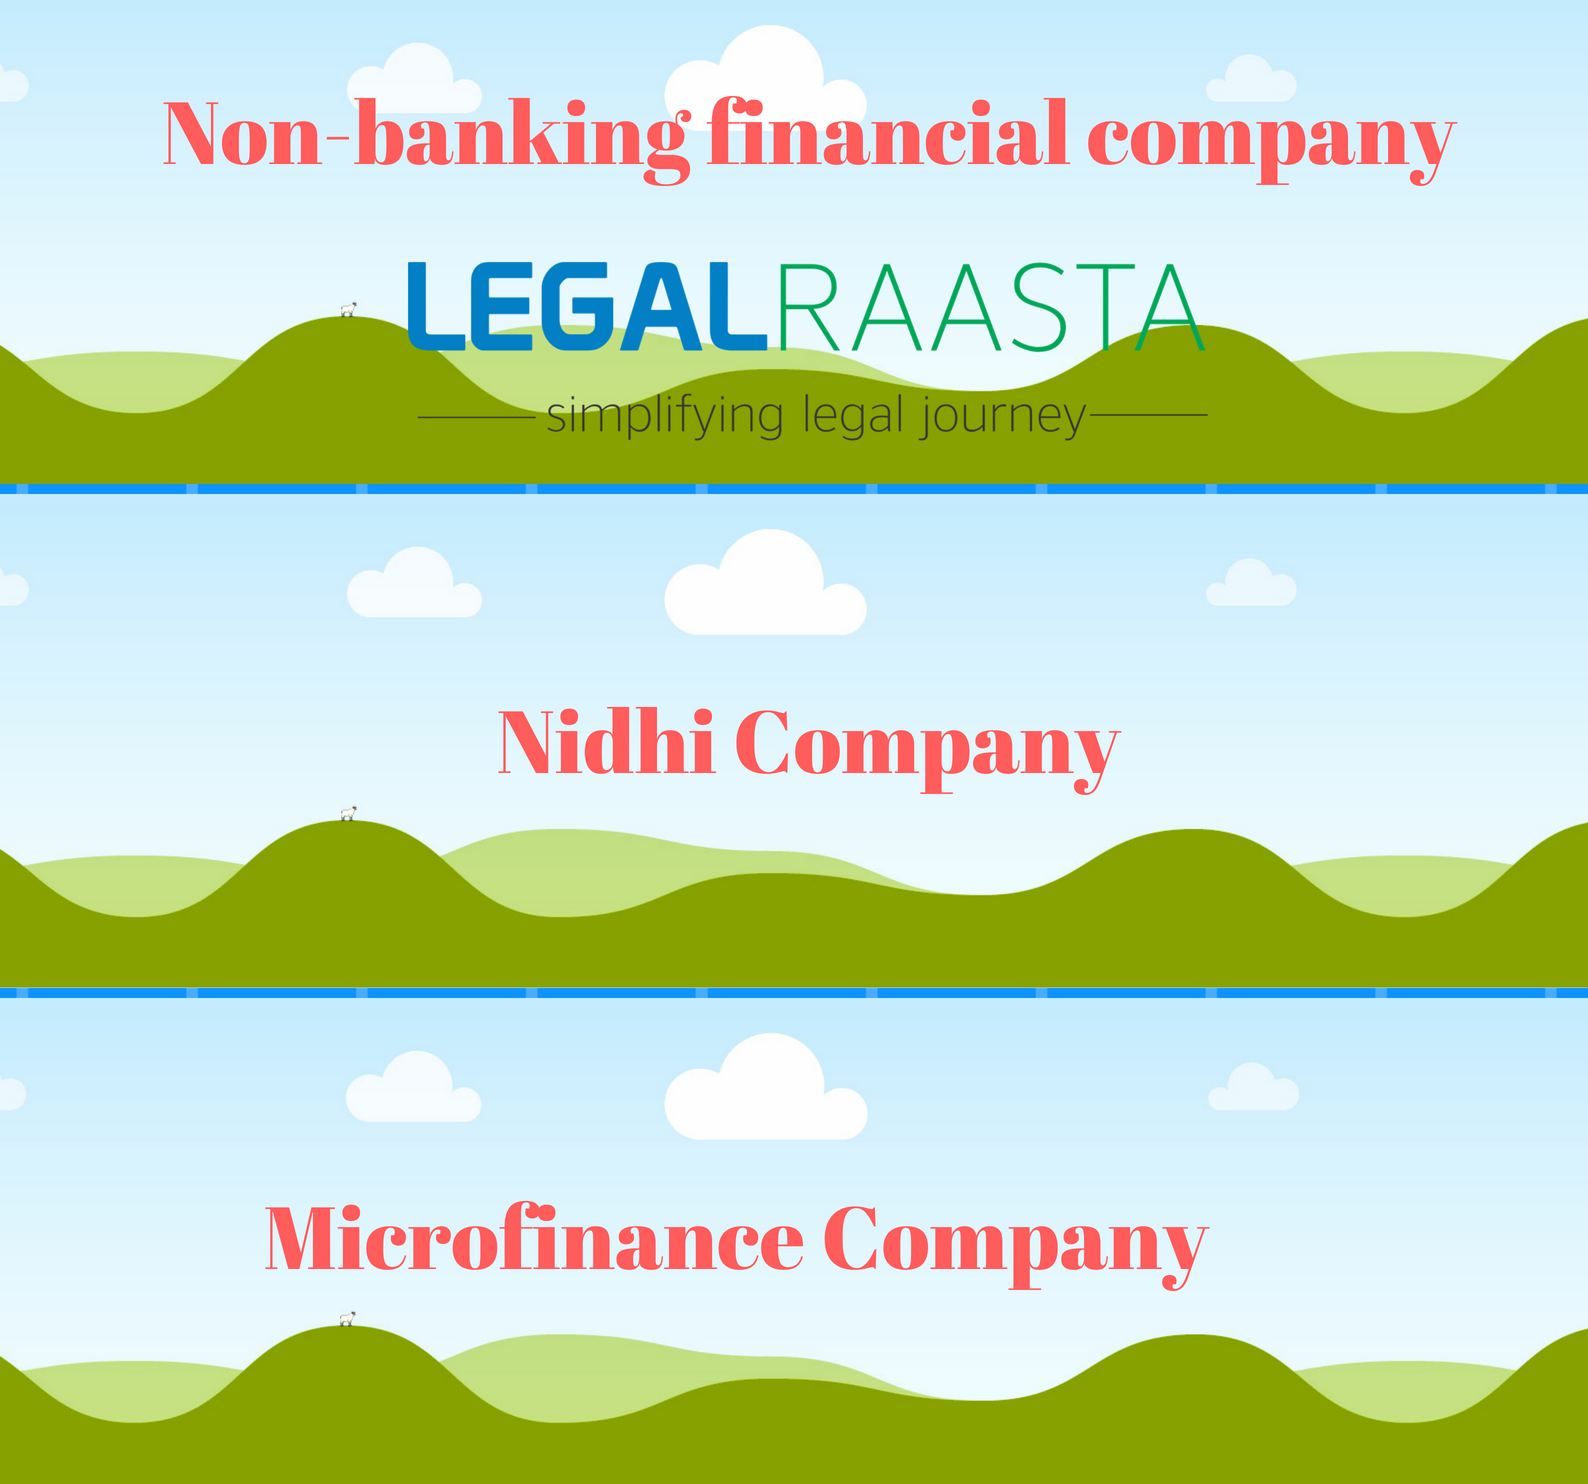 NBFC, Nidhi company, Microfinance company